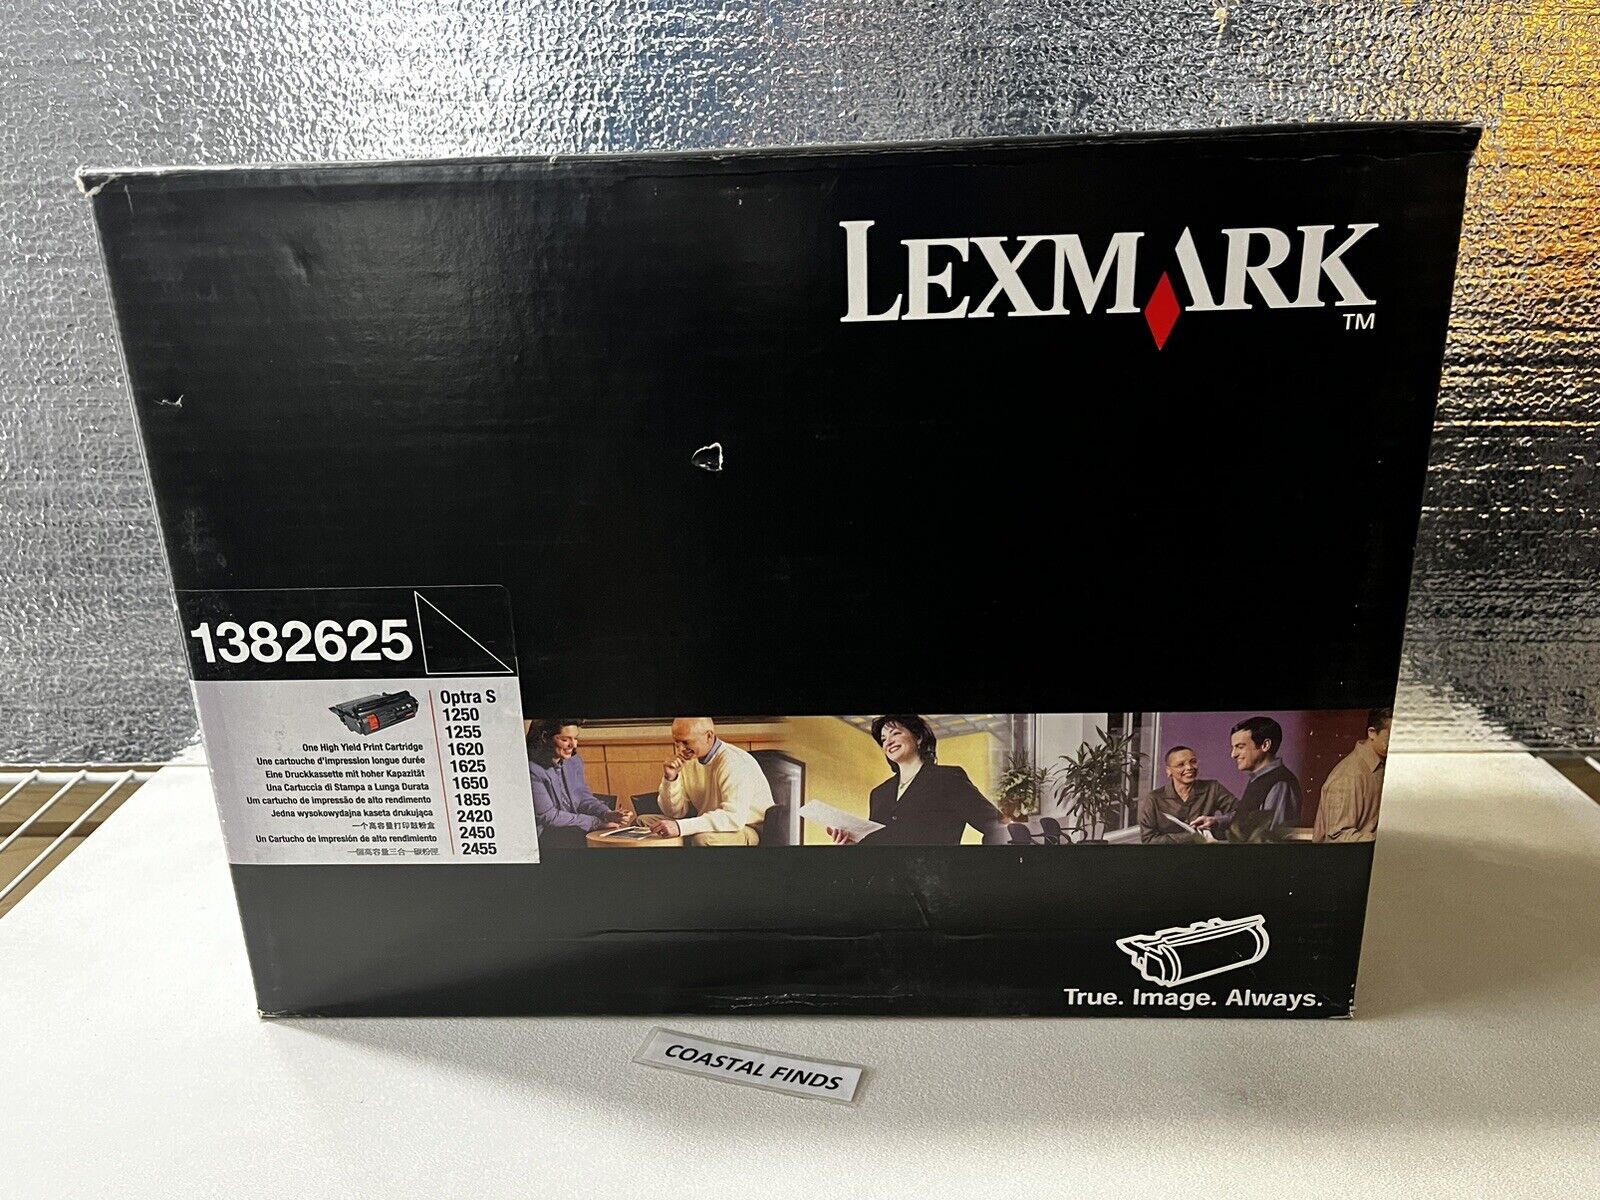 Lexmark 1382625 HIGH YIELD Black Toner OEM NEW Sealed Optra S 1250 1255 1620